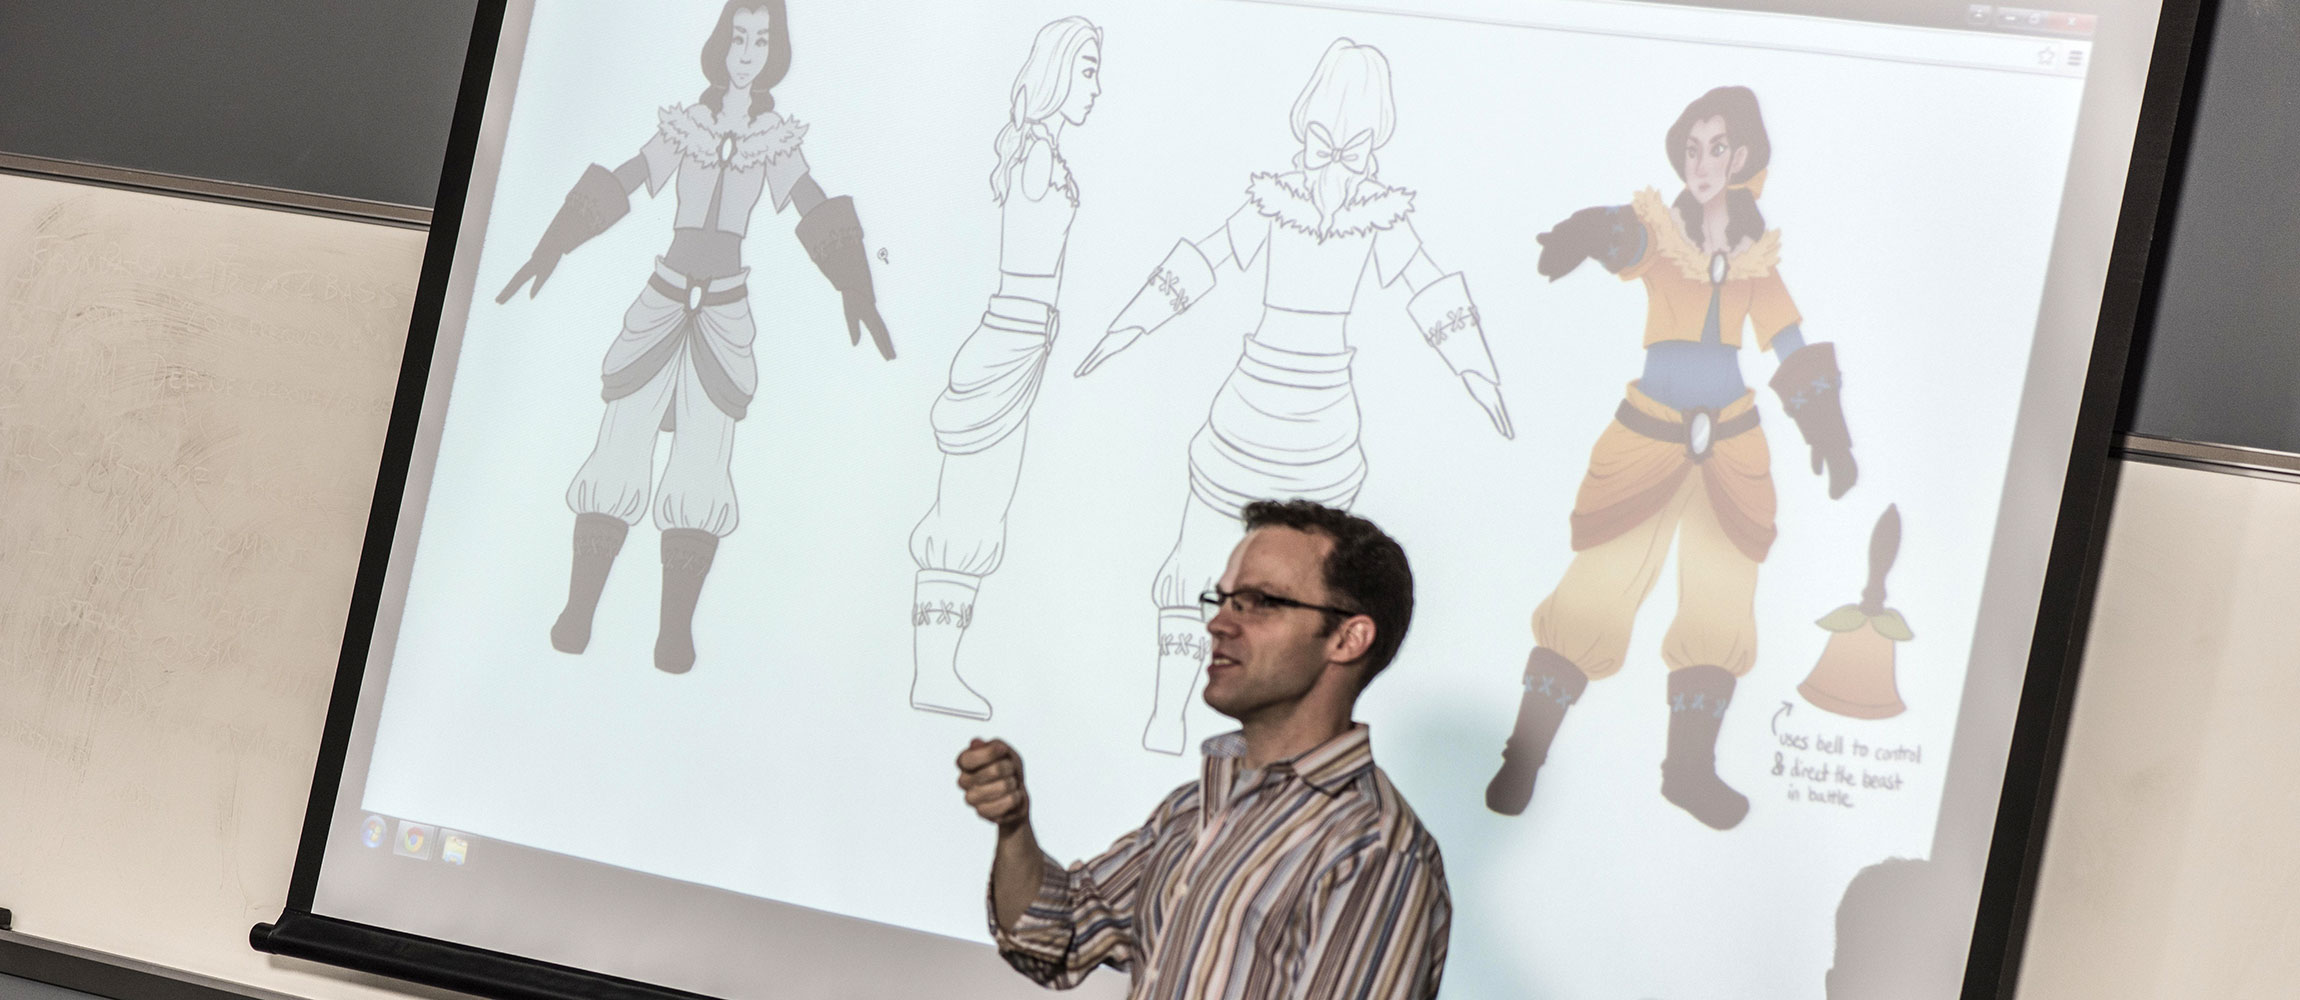 Professor Greg Grimsby teaches a Game Design class at Mason